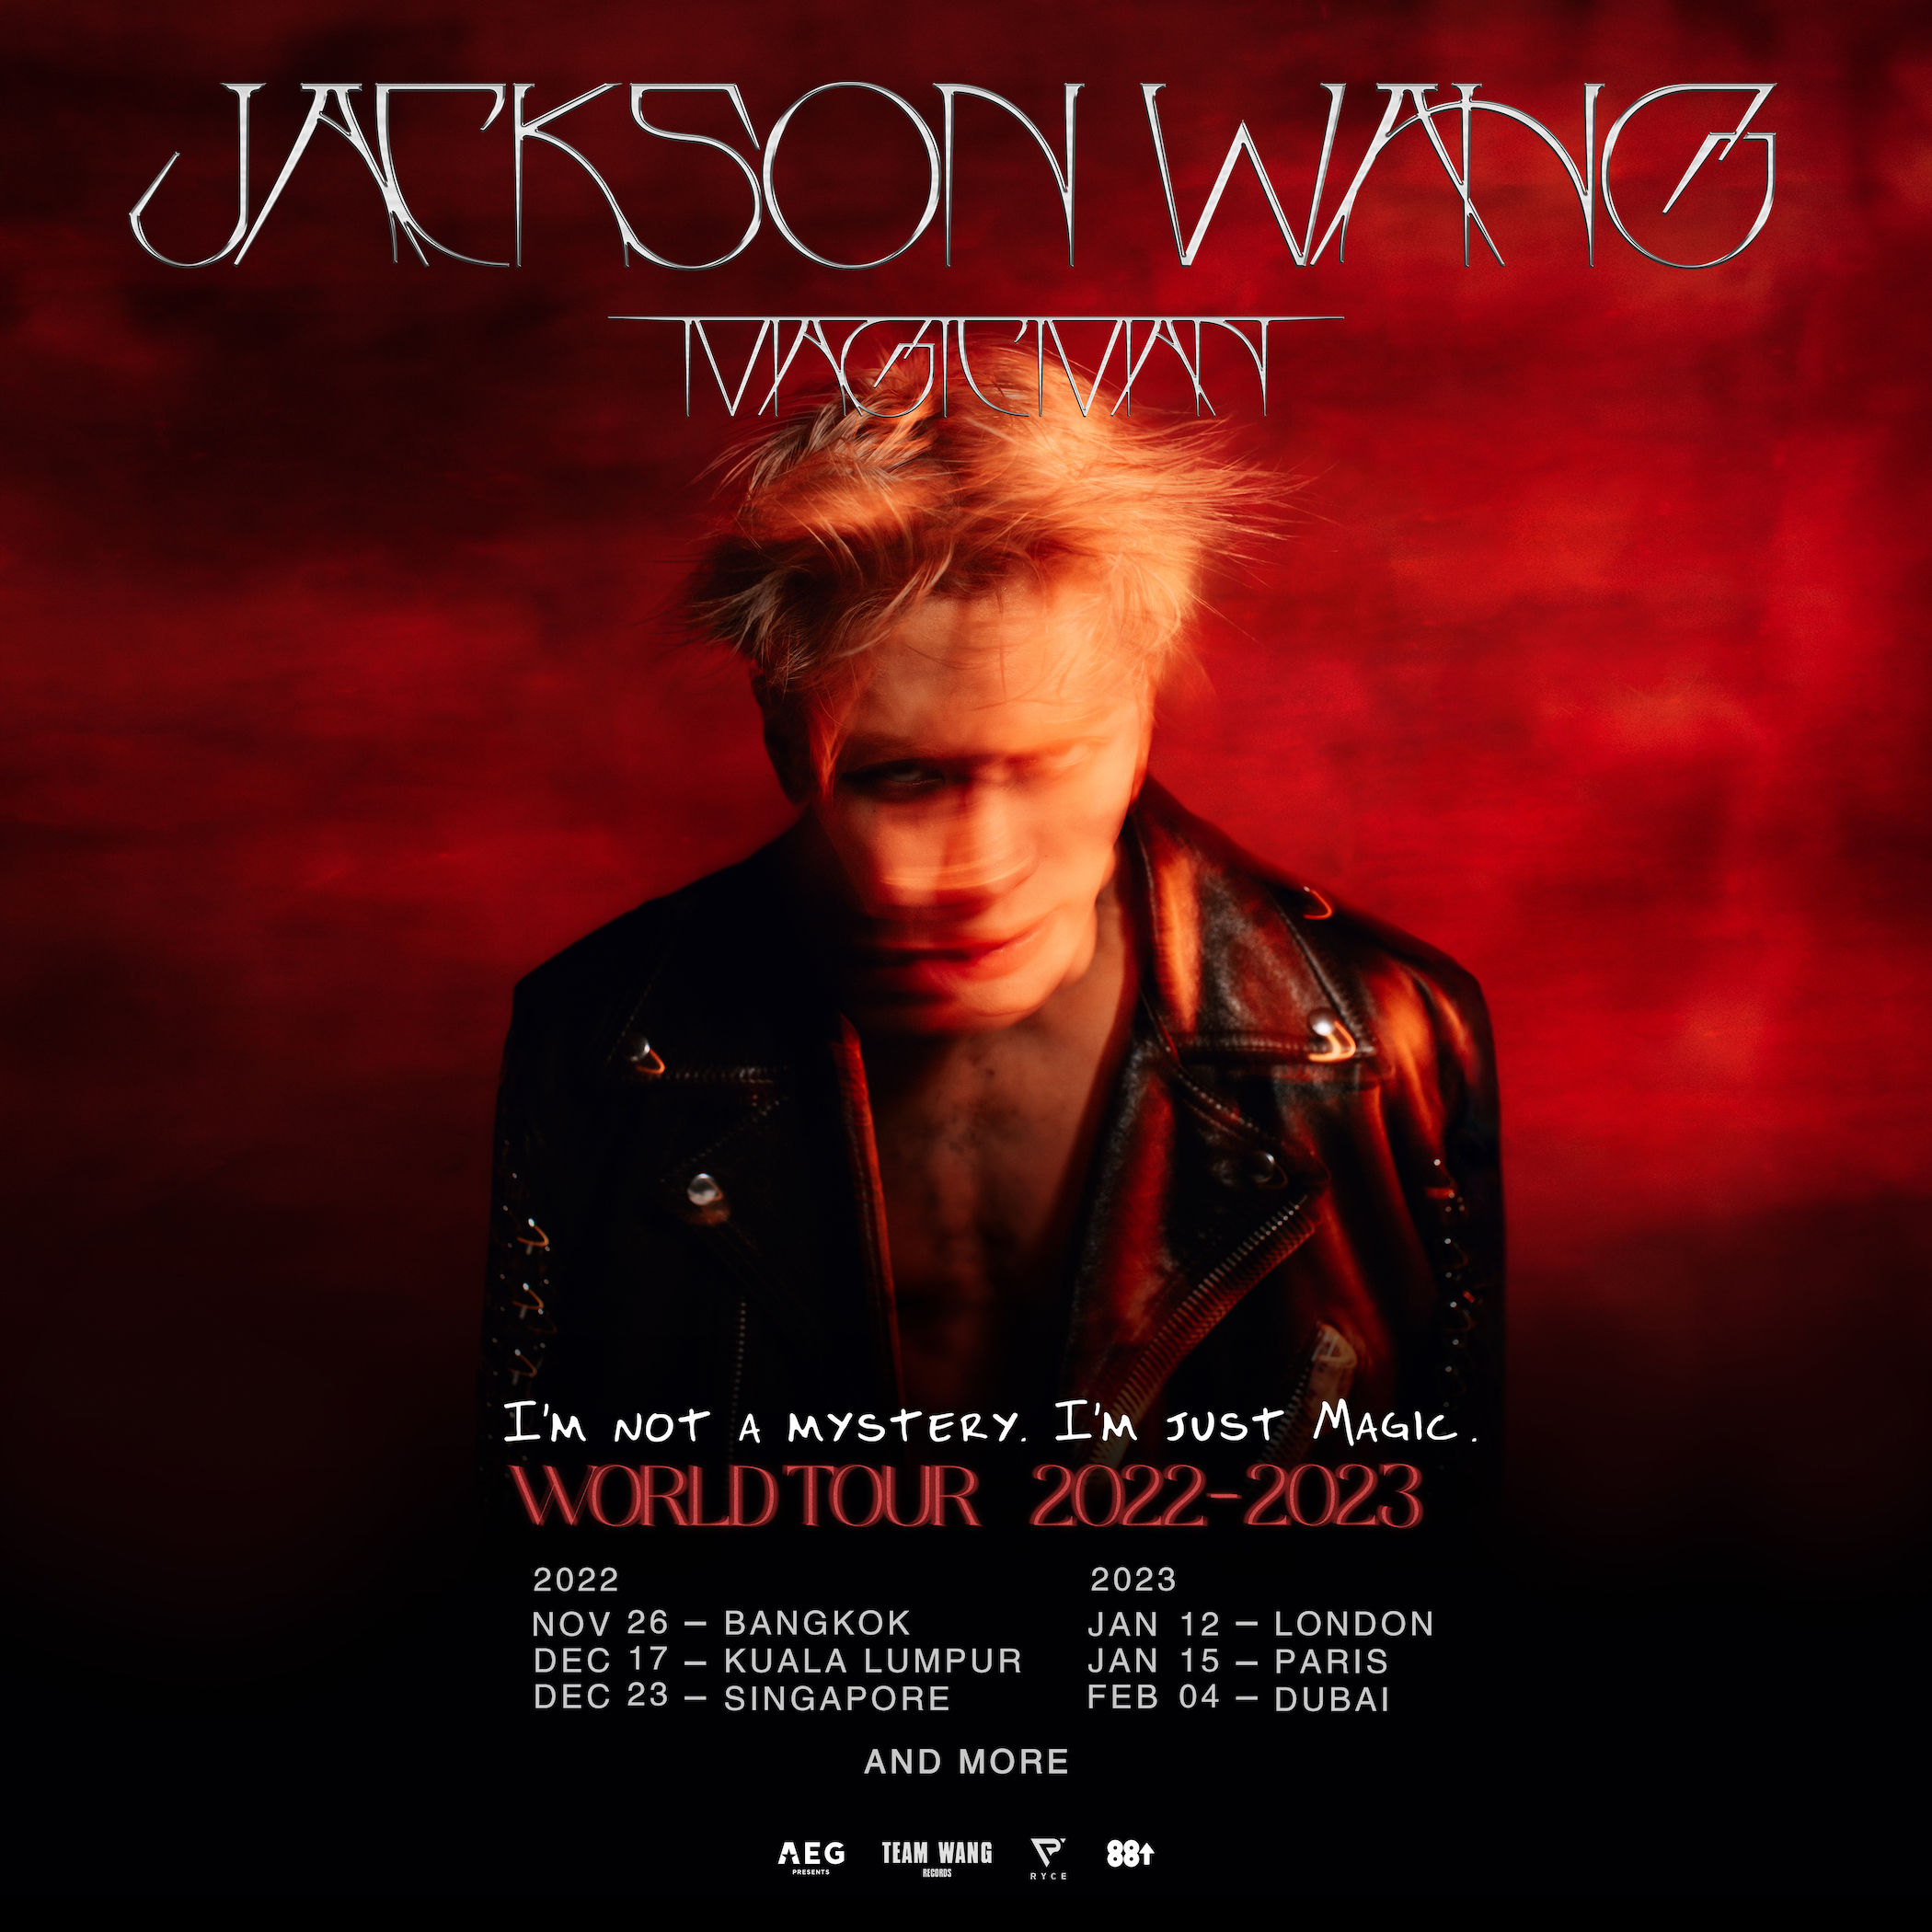 jackson wang tour south america